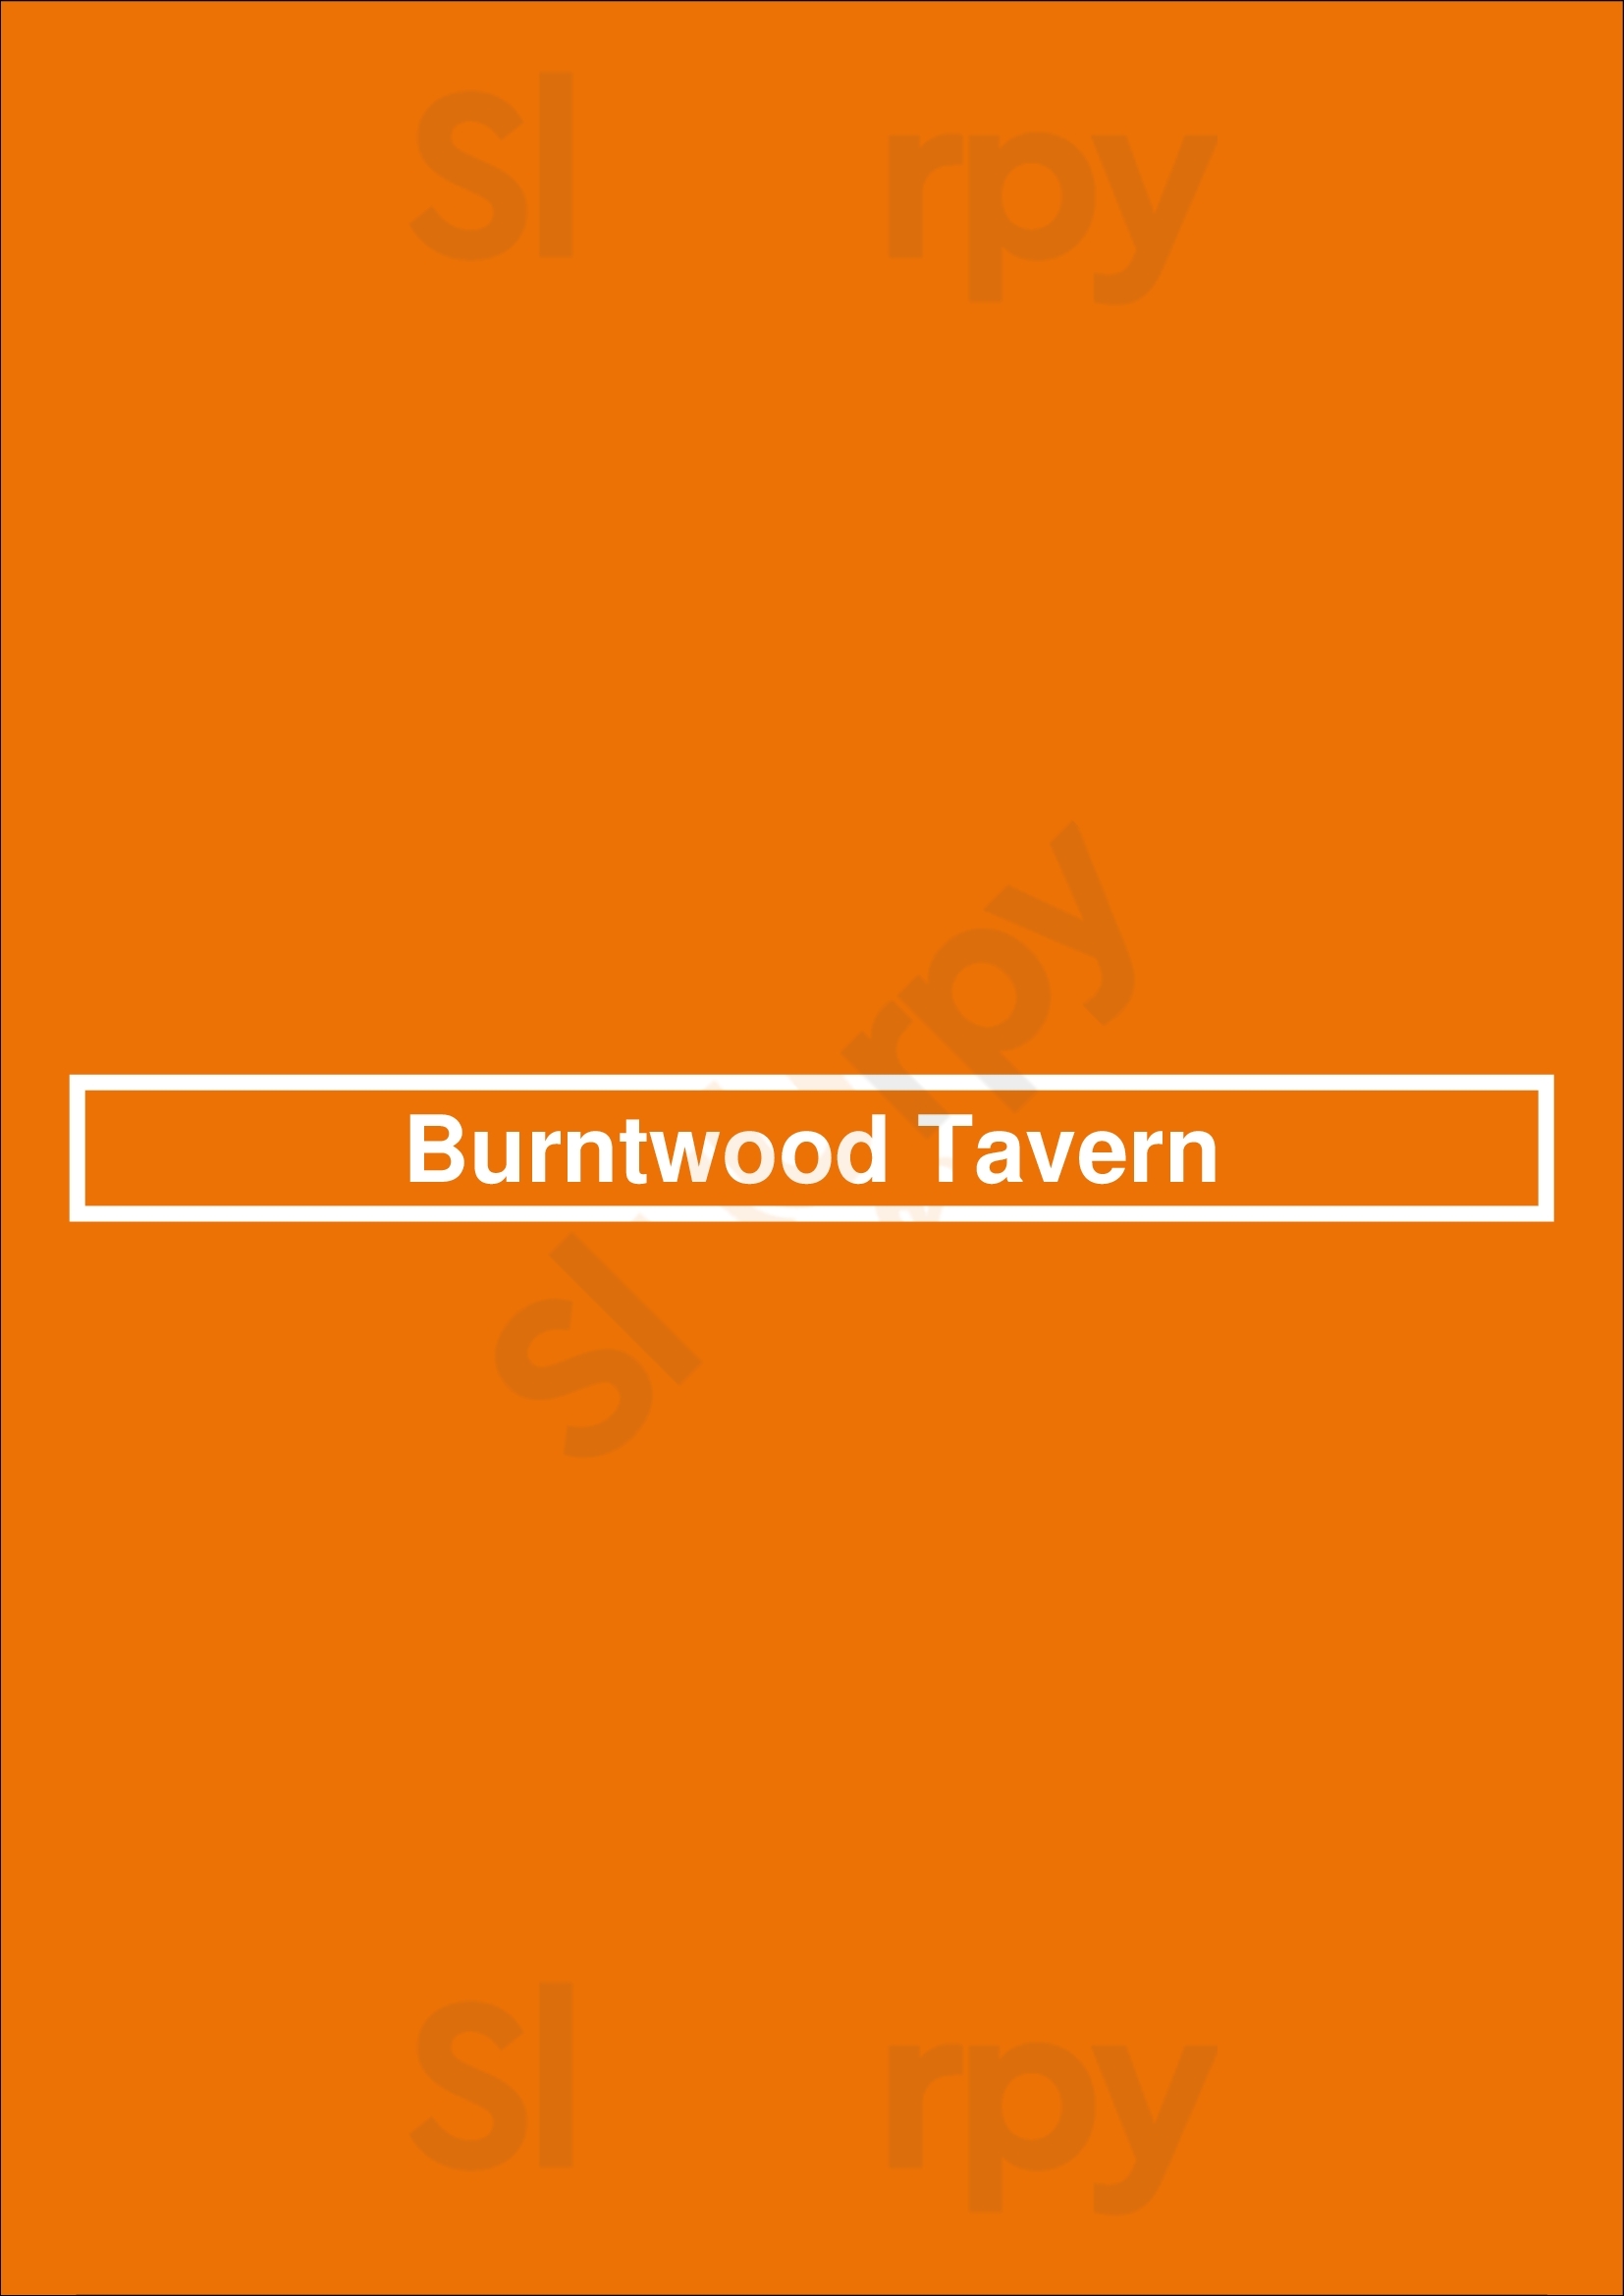 Burntwood Tavern Naples Menu - 1